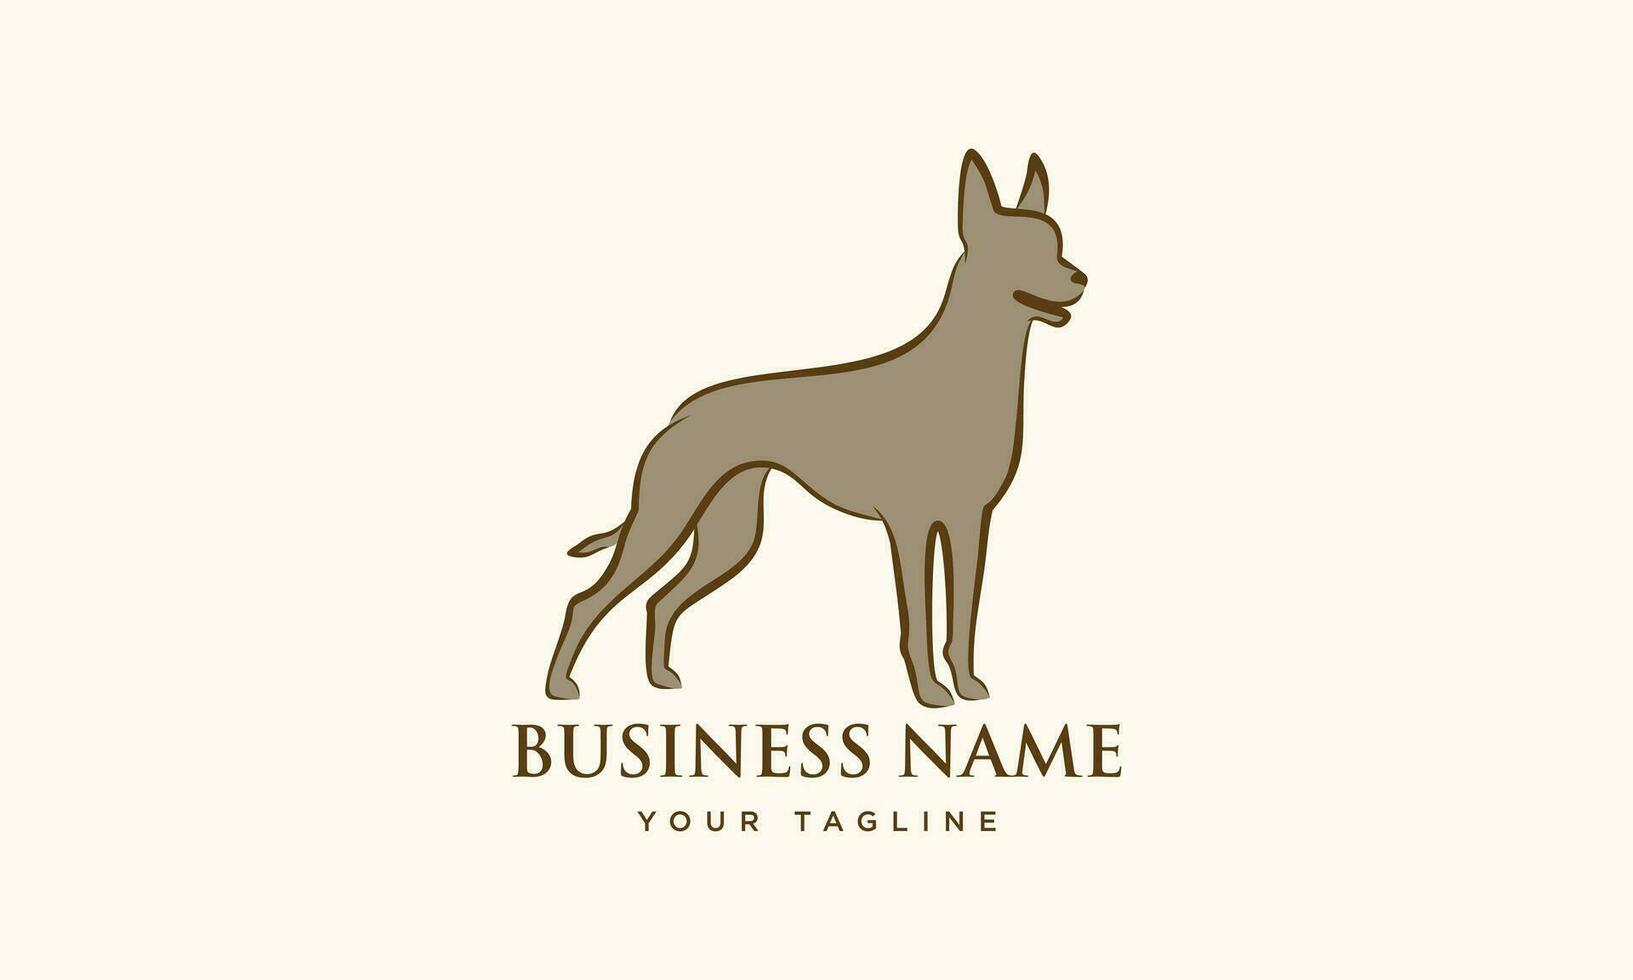 line art dog logo template vector